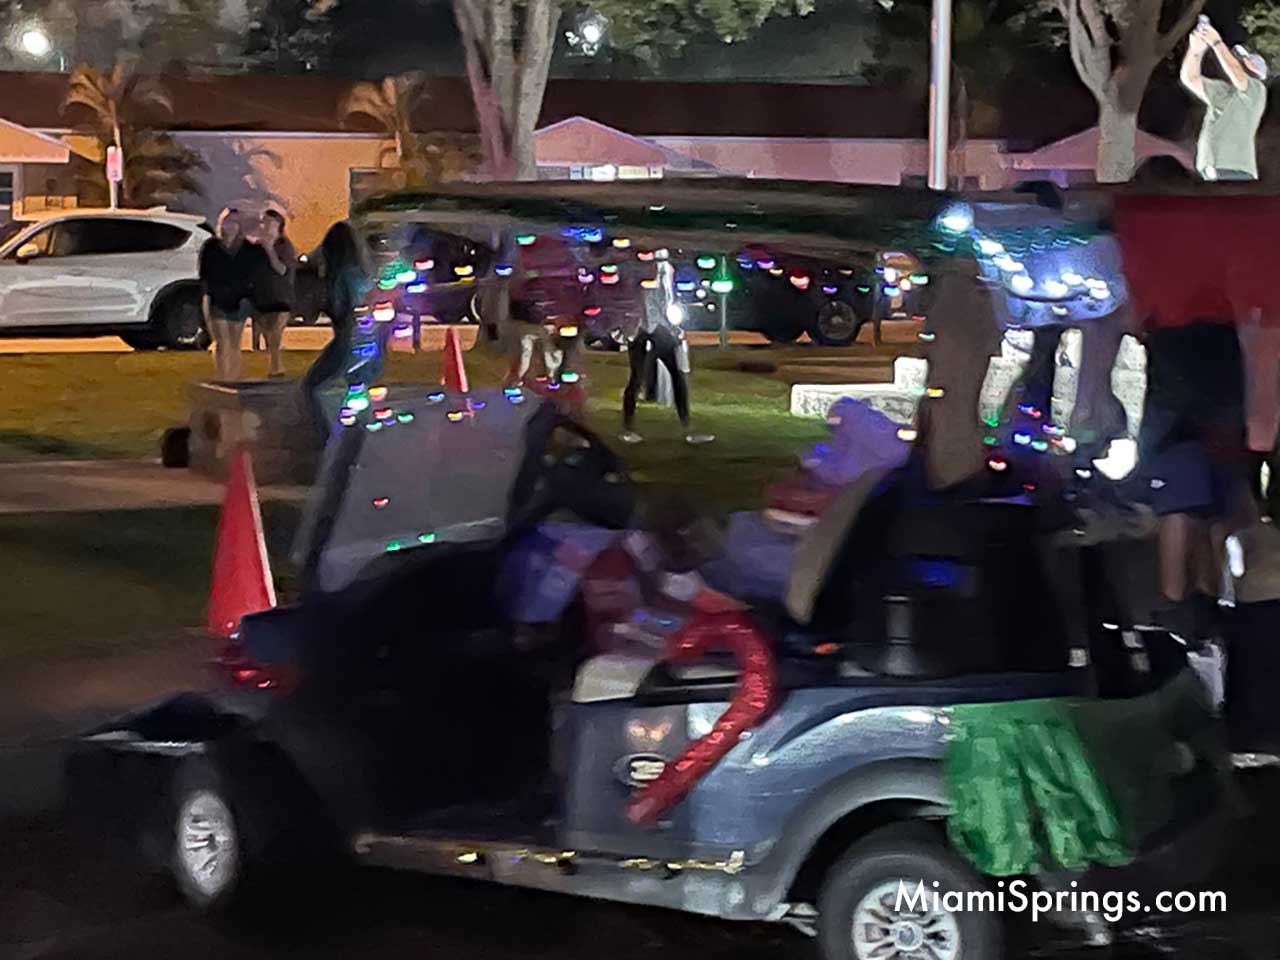 Miami Springs Golf Cart Parade